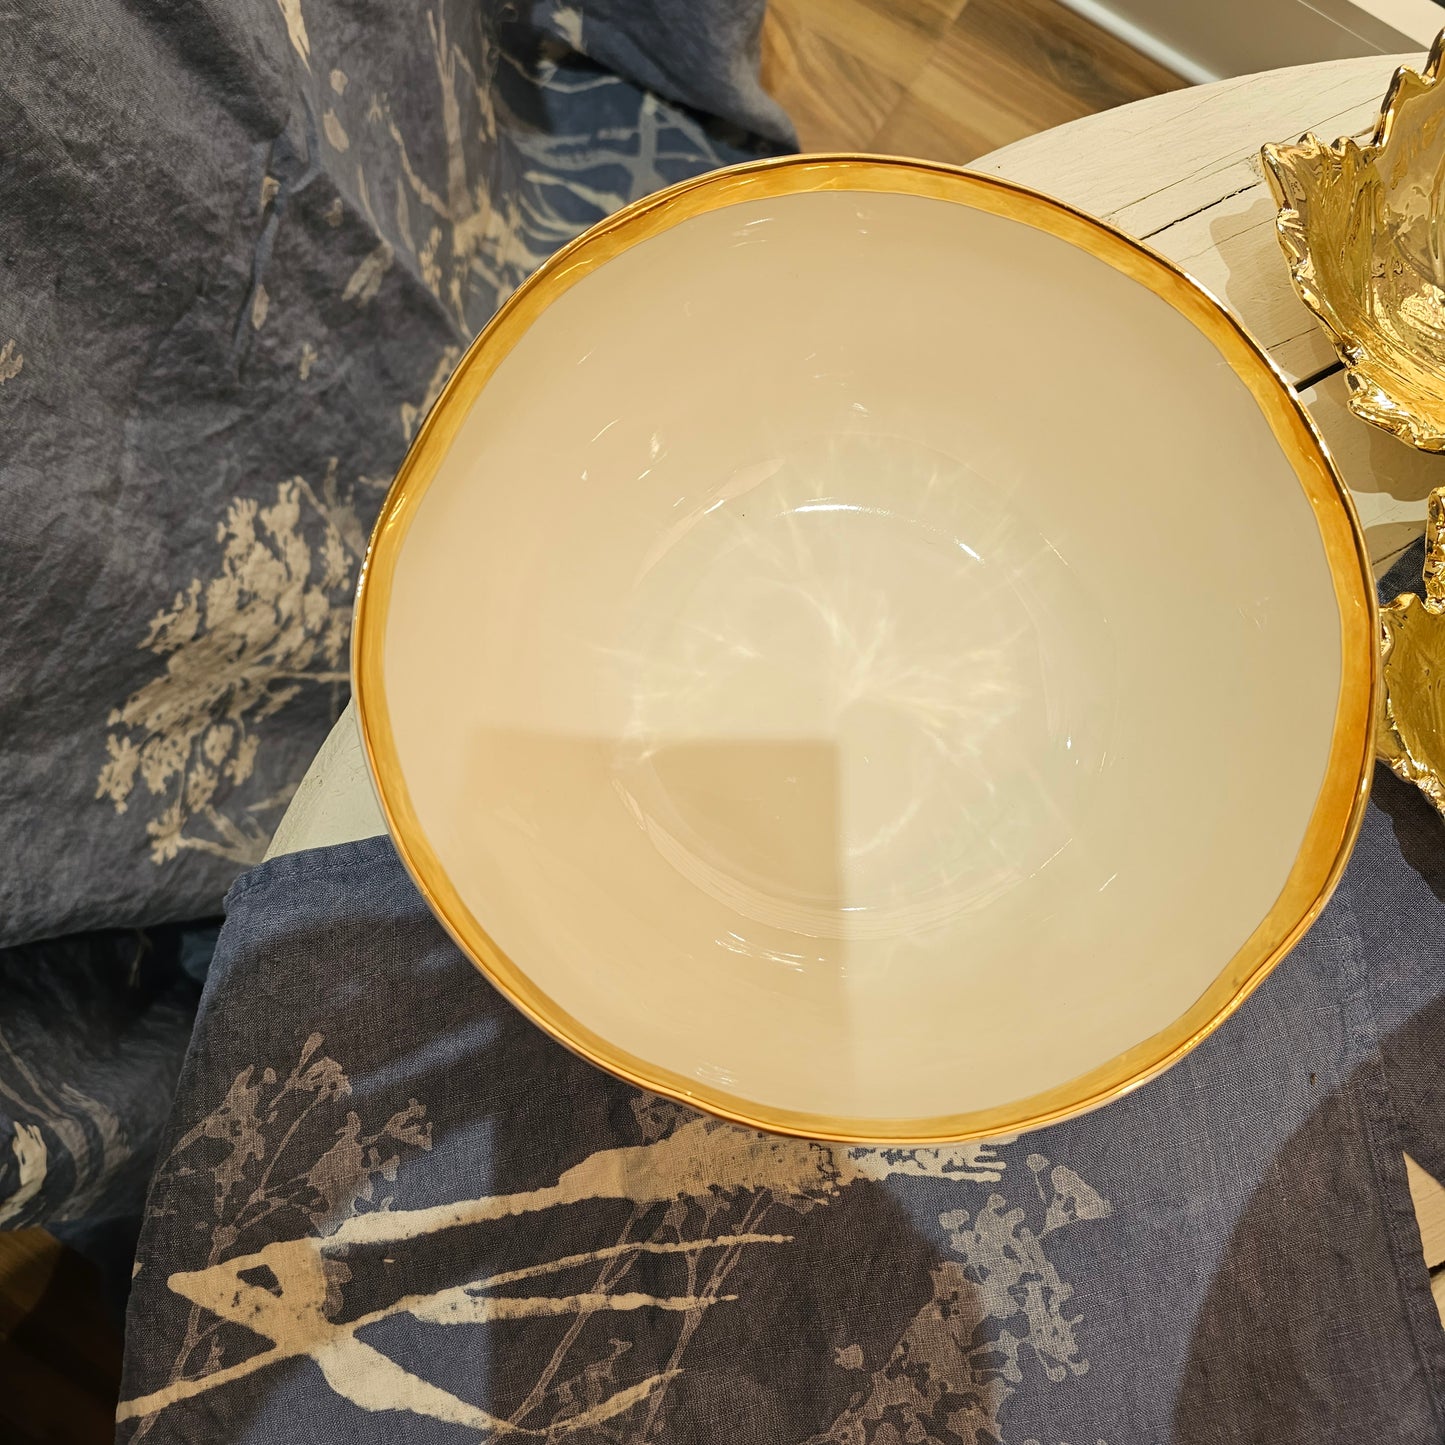 Bowl Porcelain centerpiece with gold edge